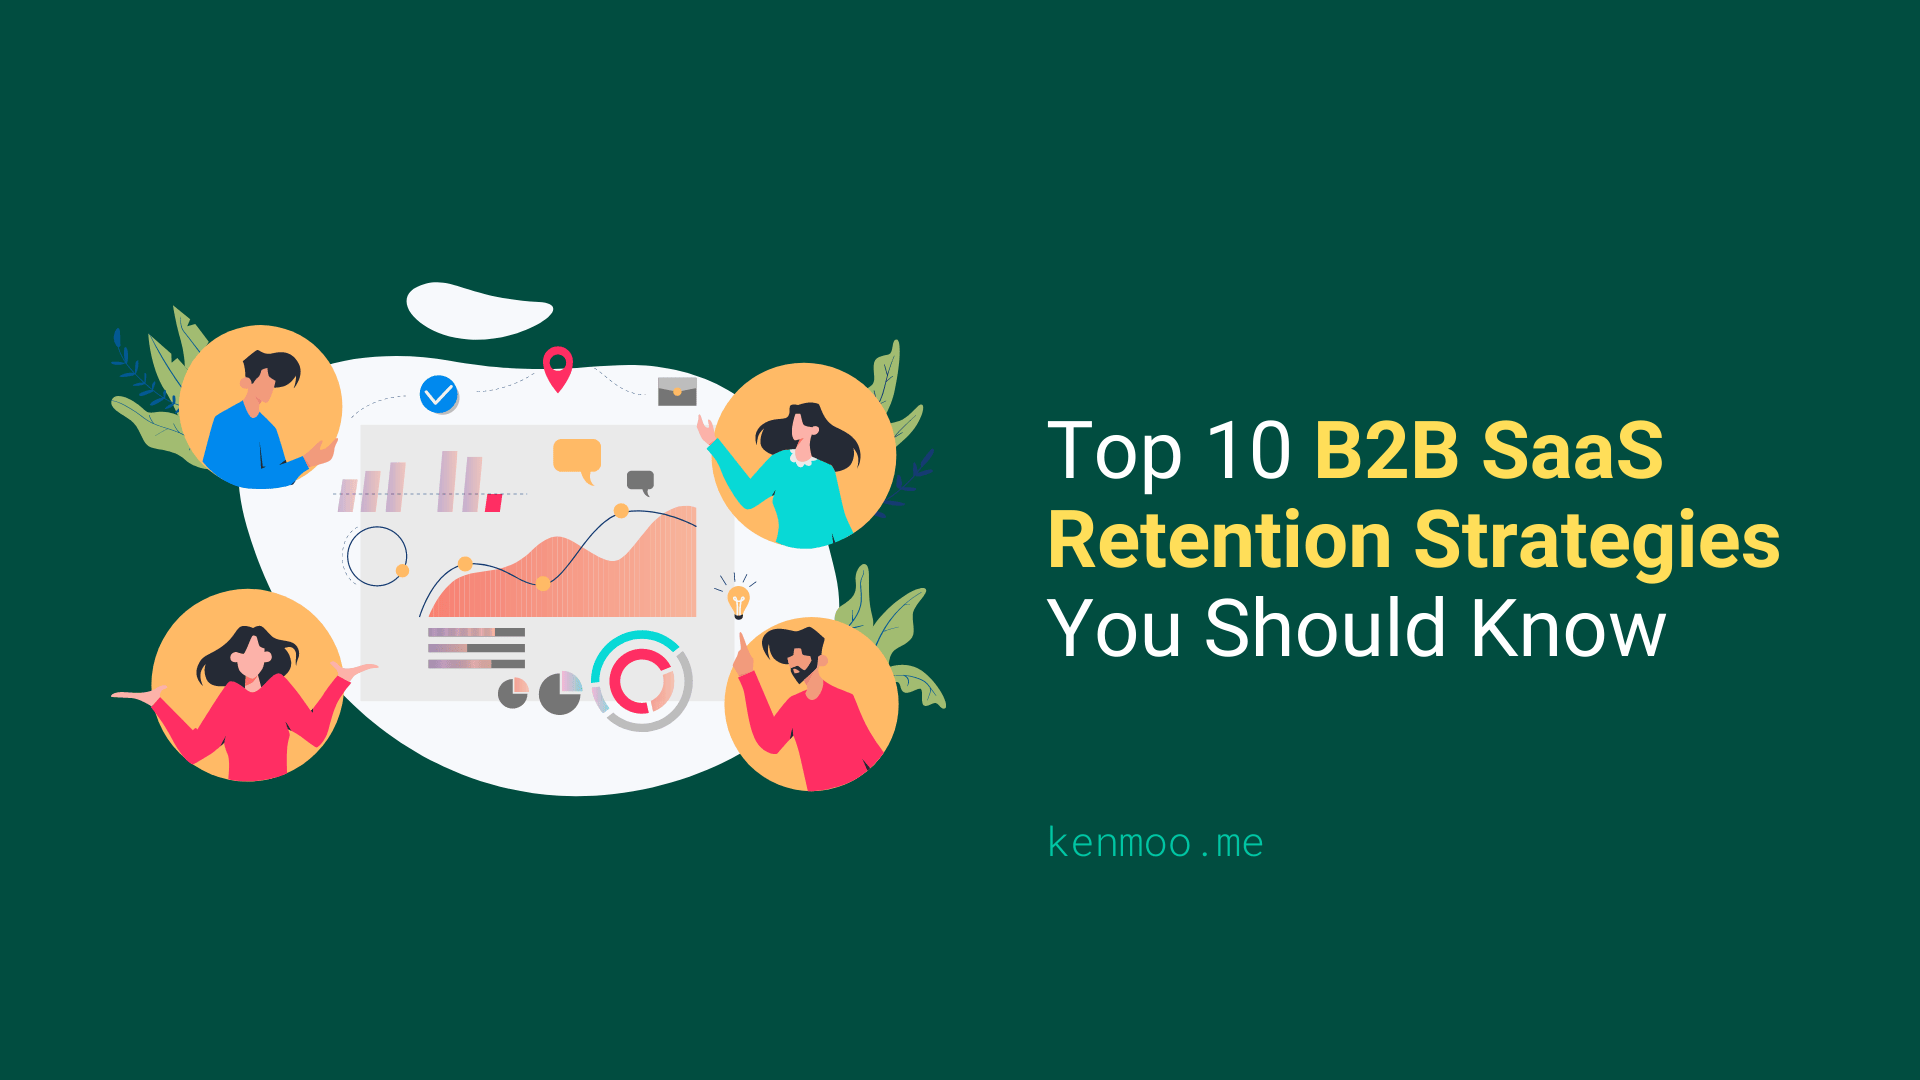 Top 10 B2B SaaS Retention Strategies You Should Know